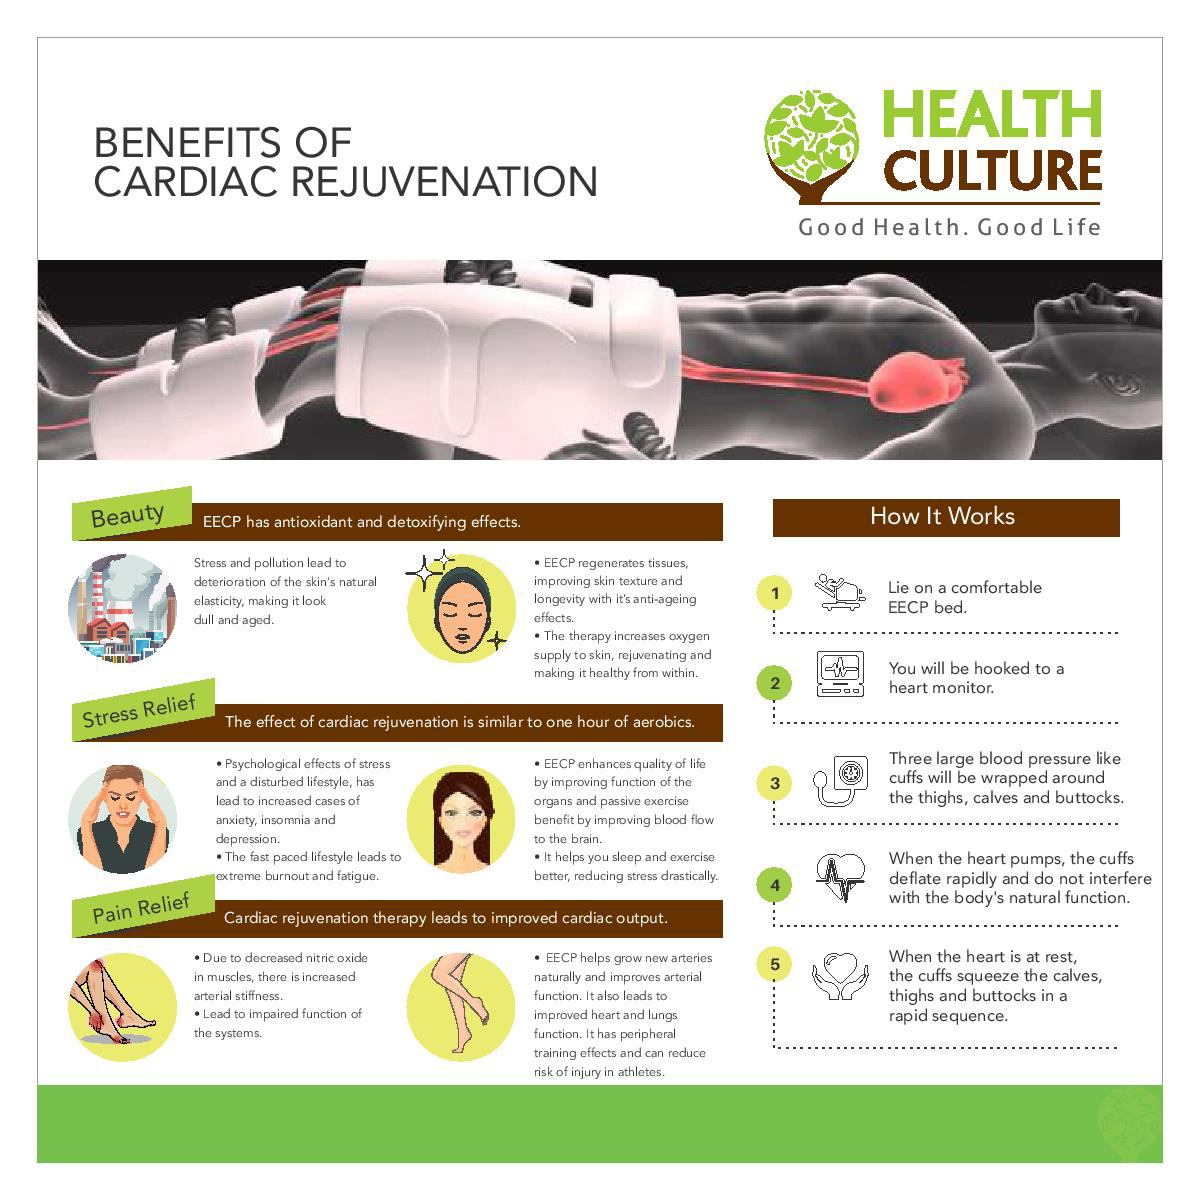 Benefits of Cardiac Rejuvenation Article - Health Culture